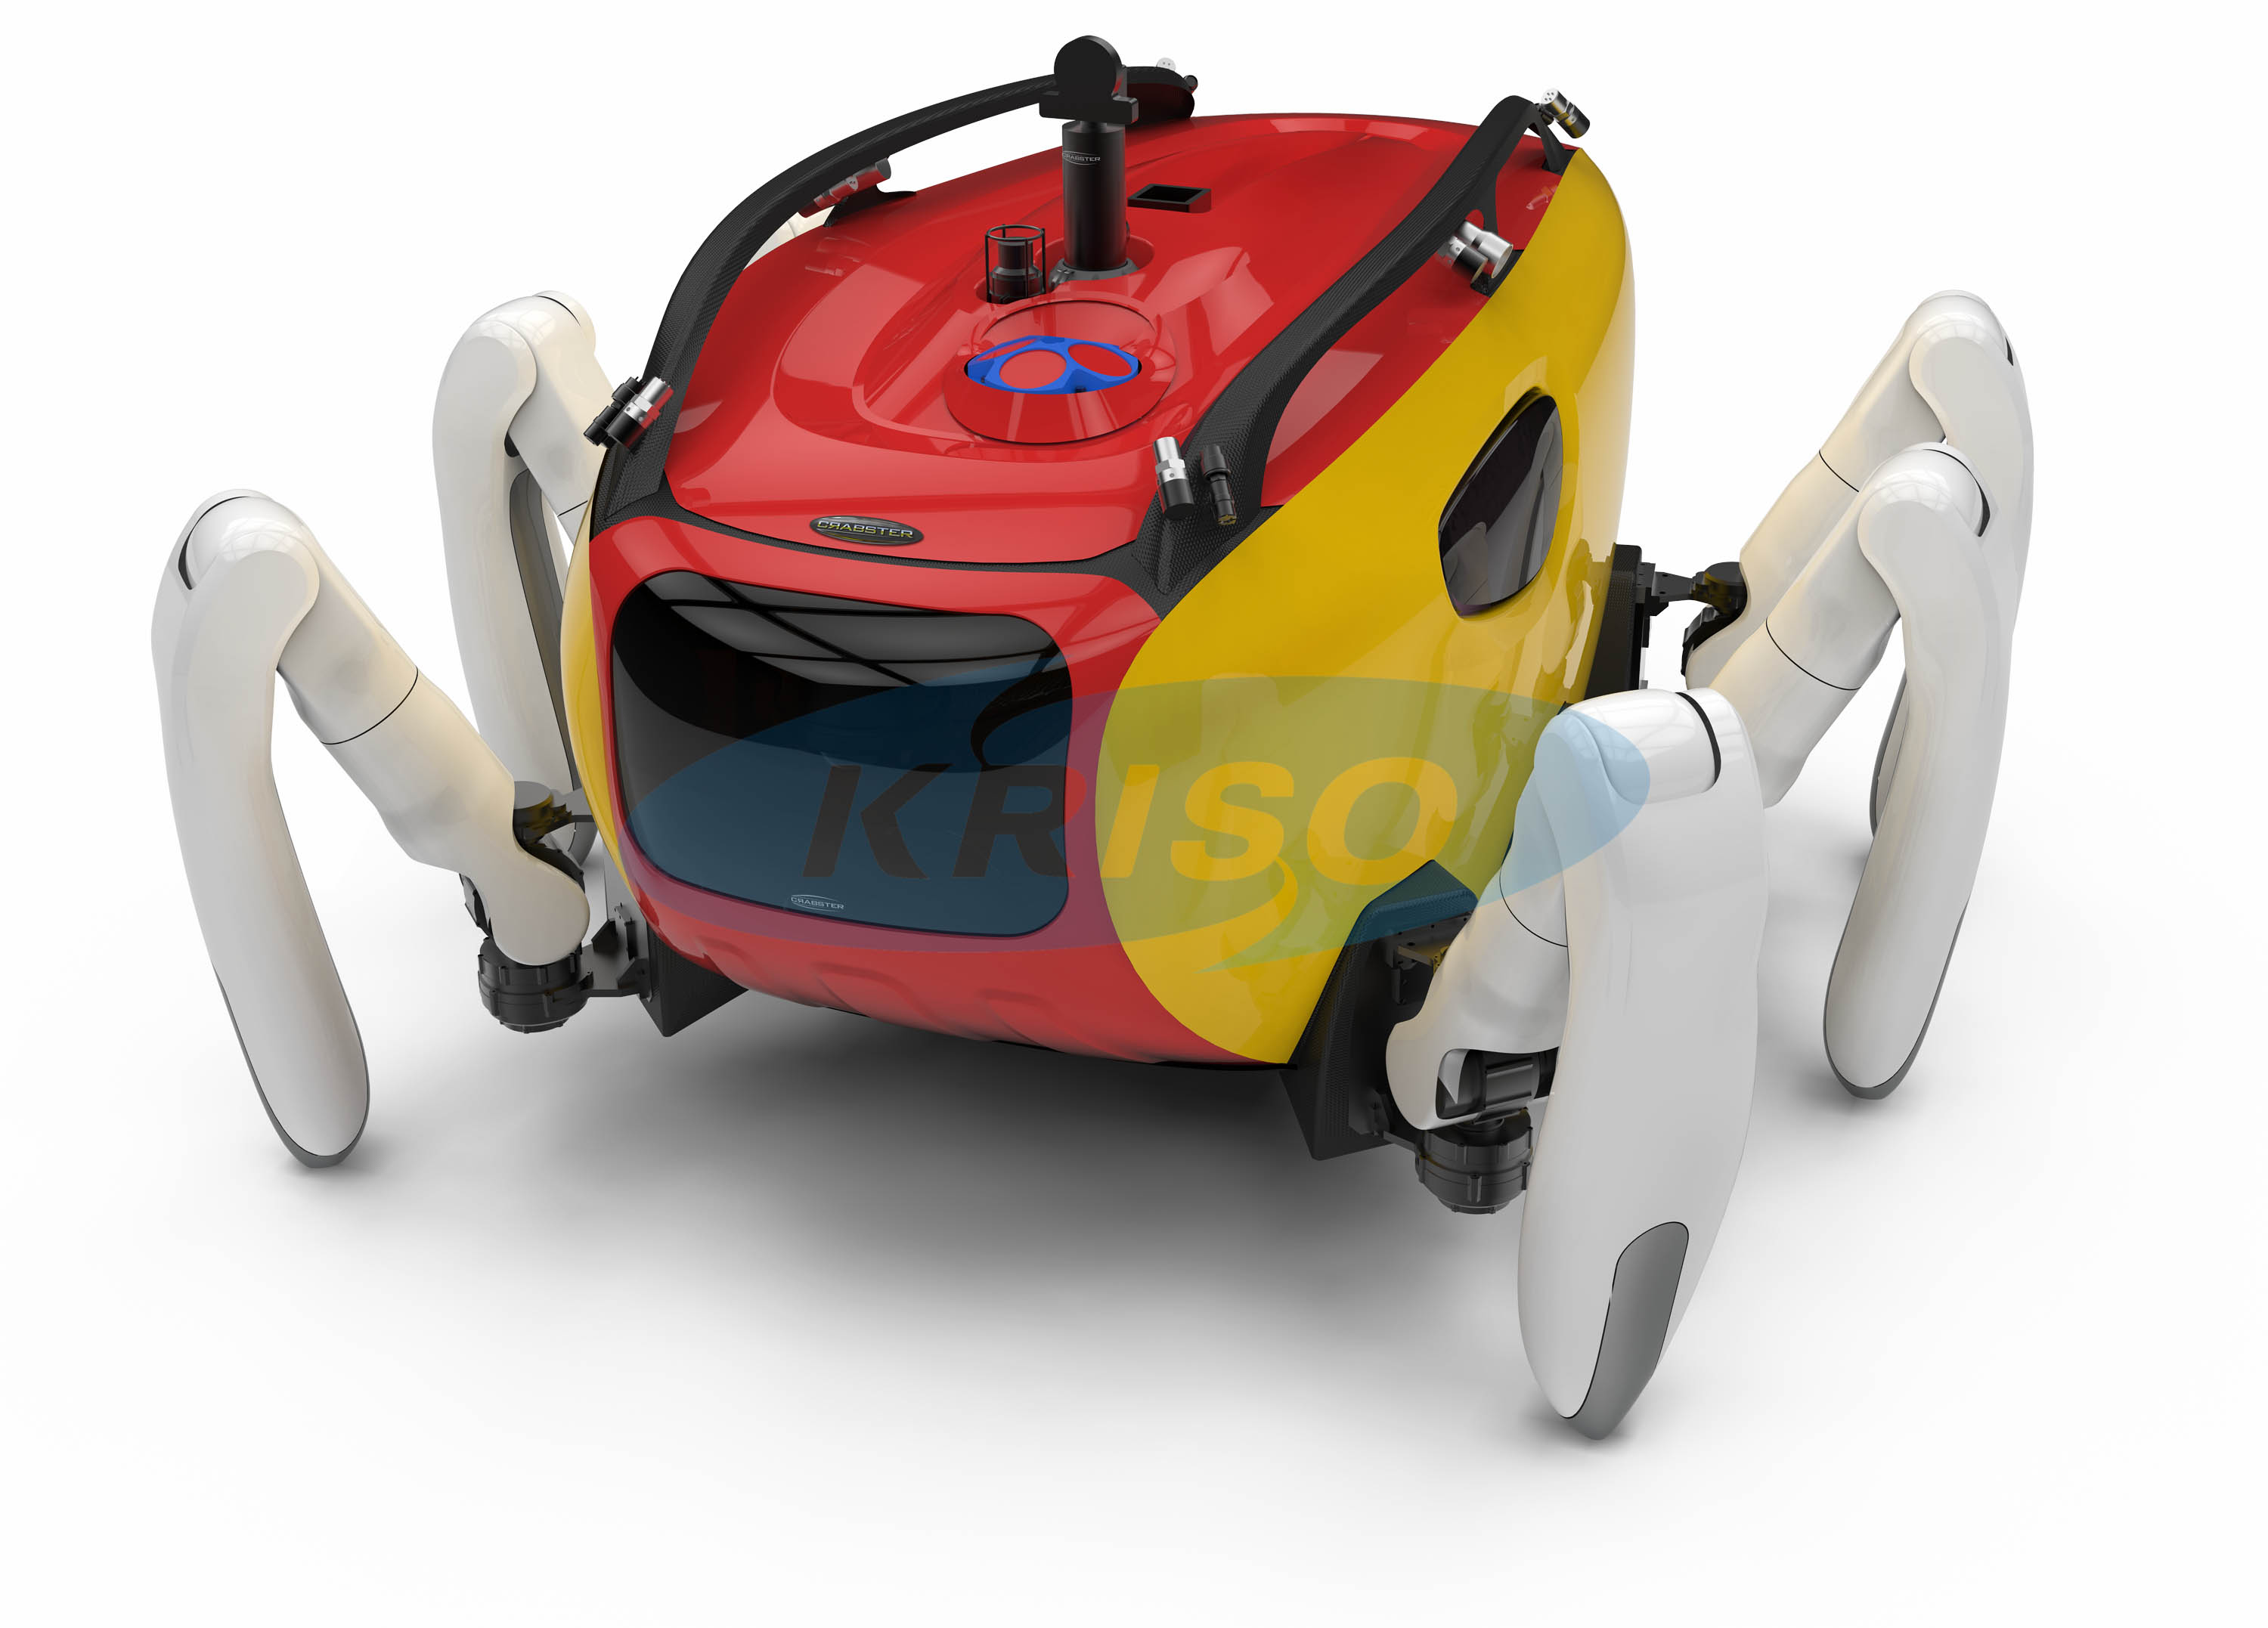 Crabster (Multi-legged seabed walking robot)